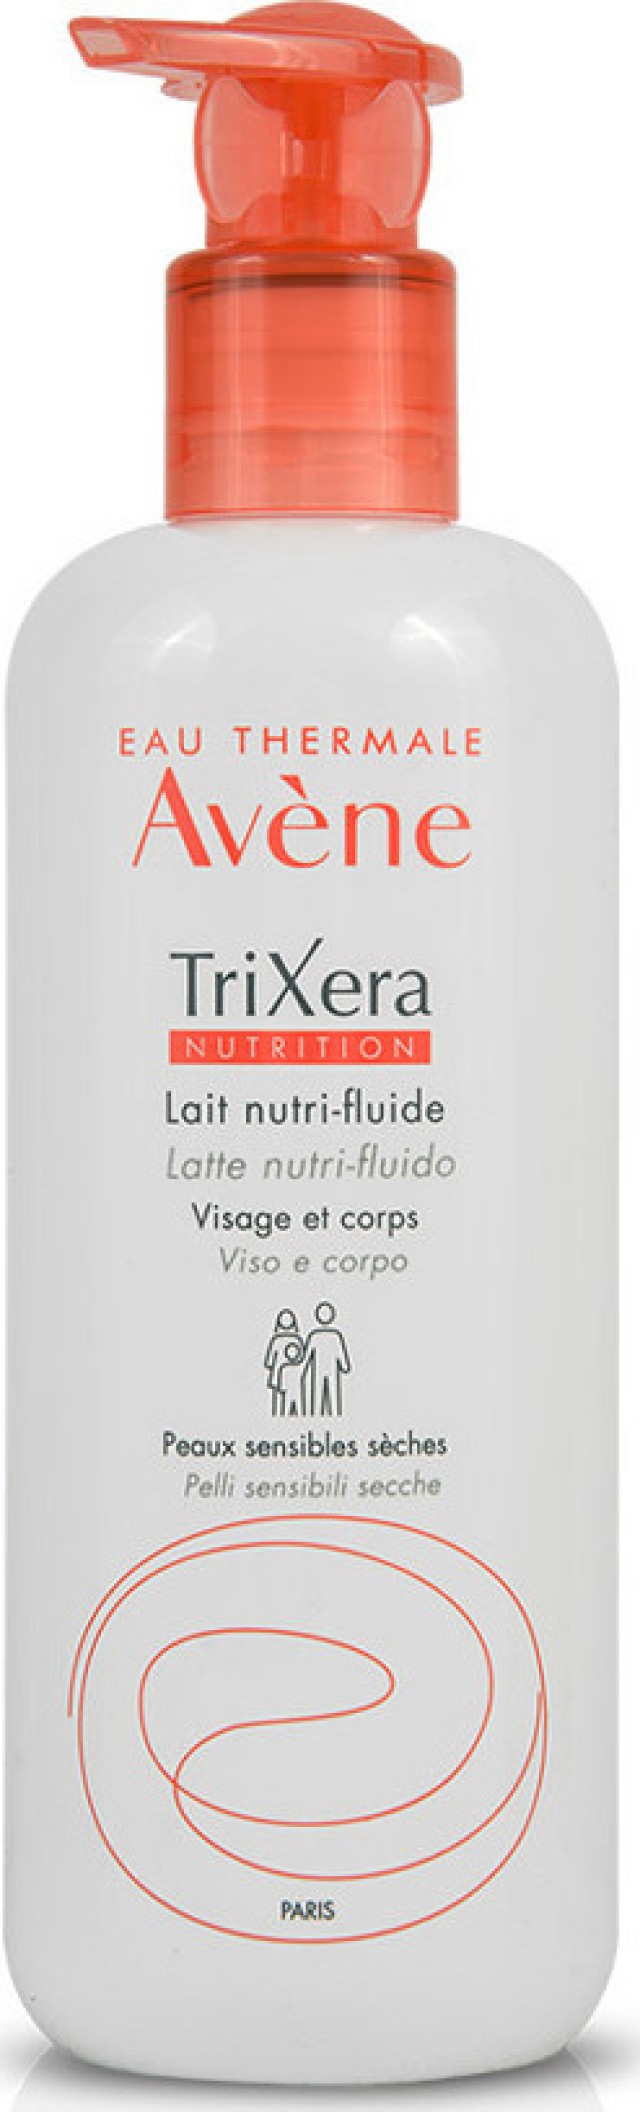 Avene Trixera Nutrition Lait Nutri-Fluid -30% 400ml